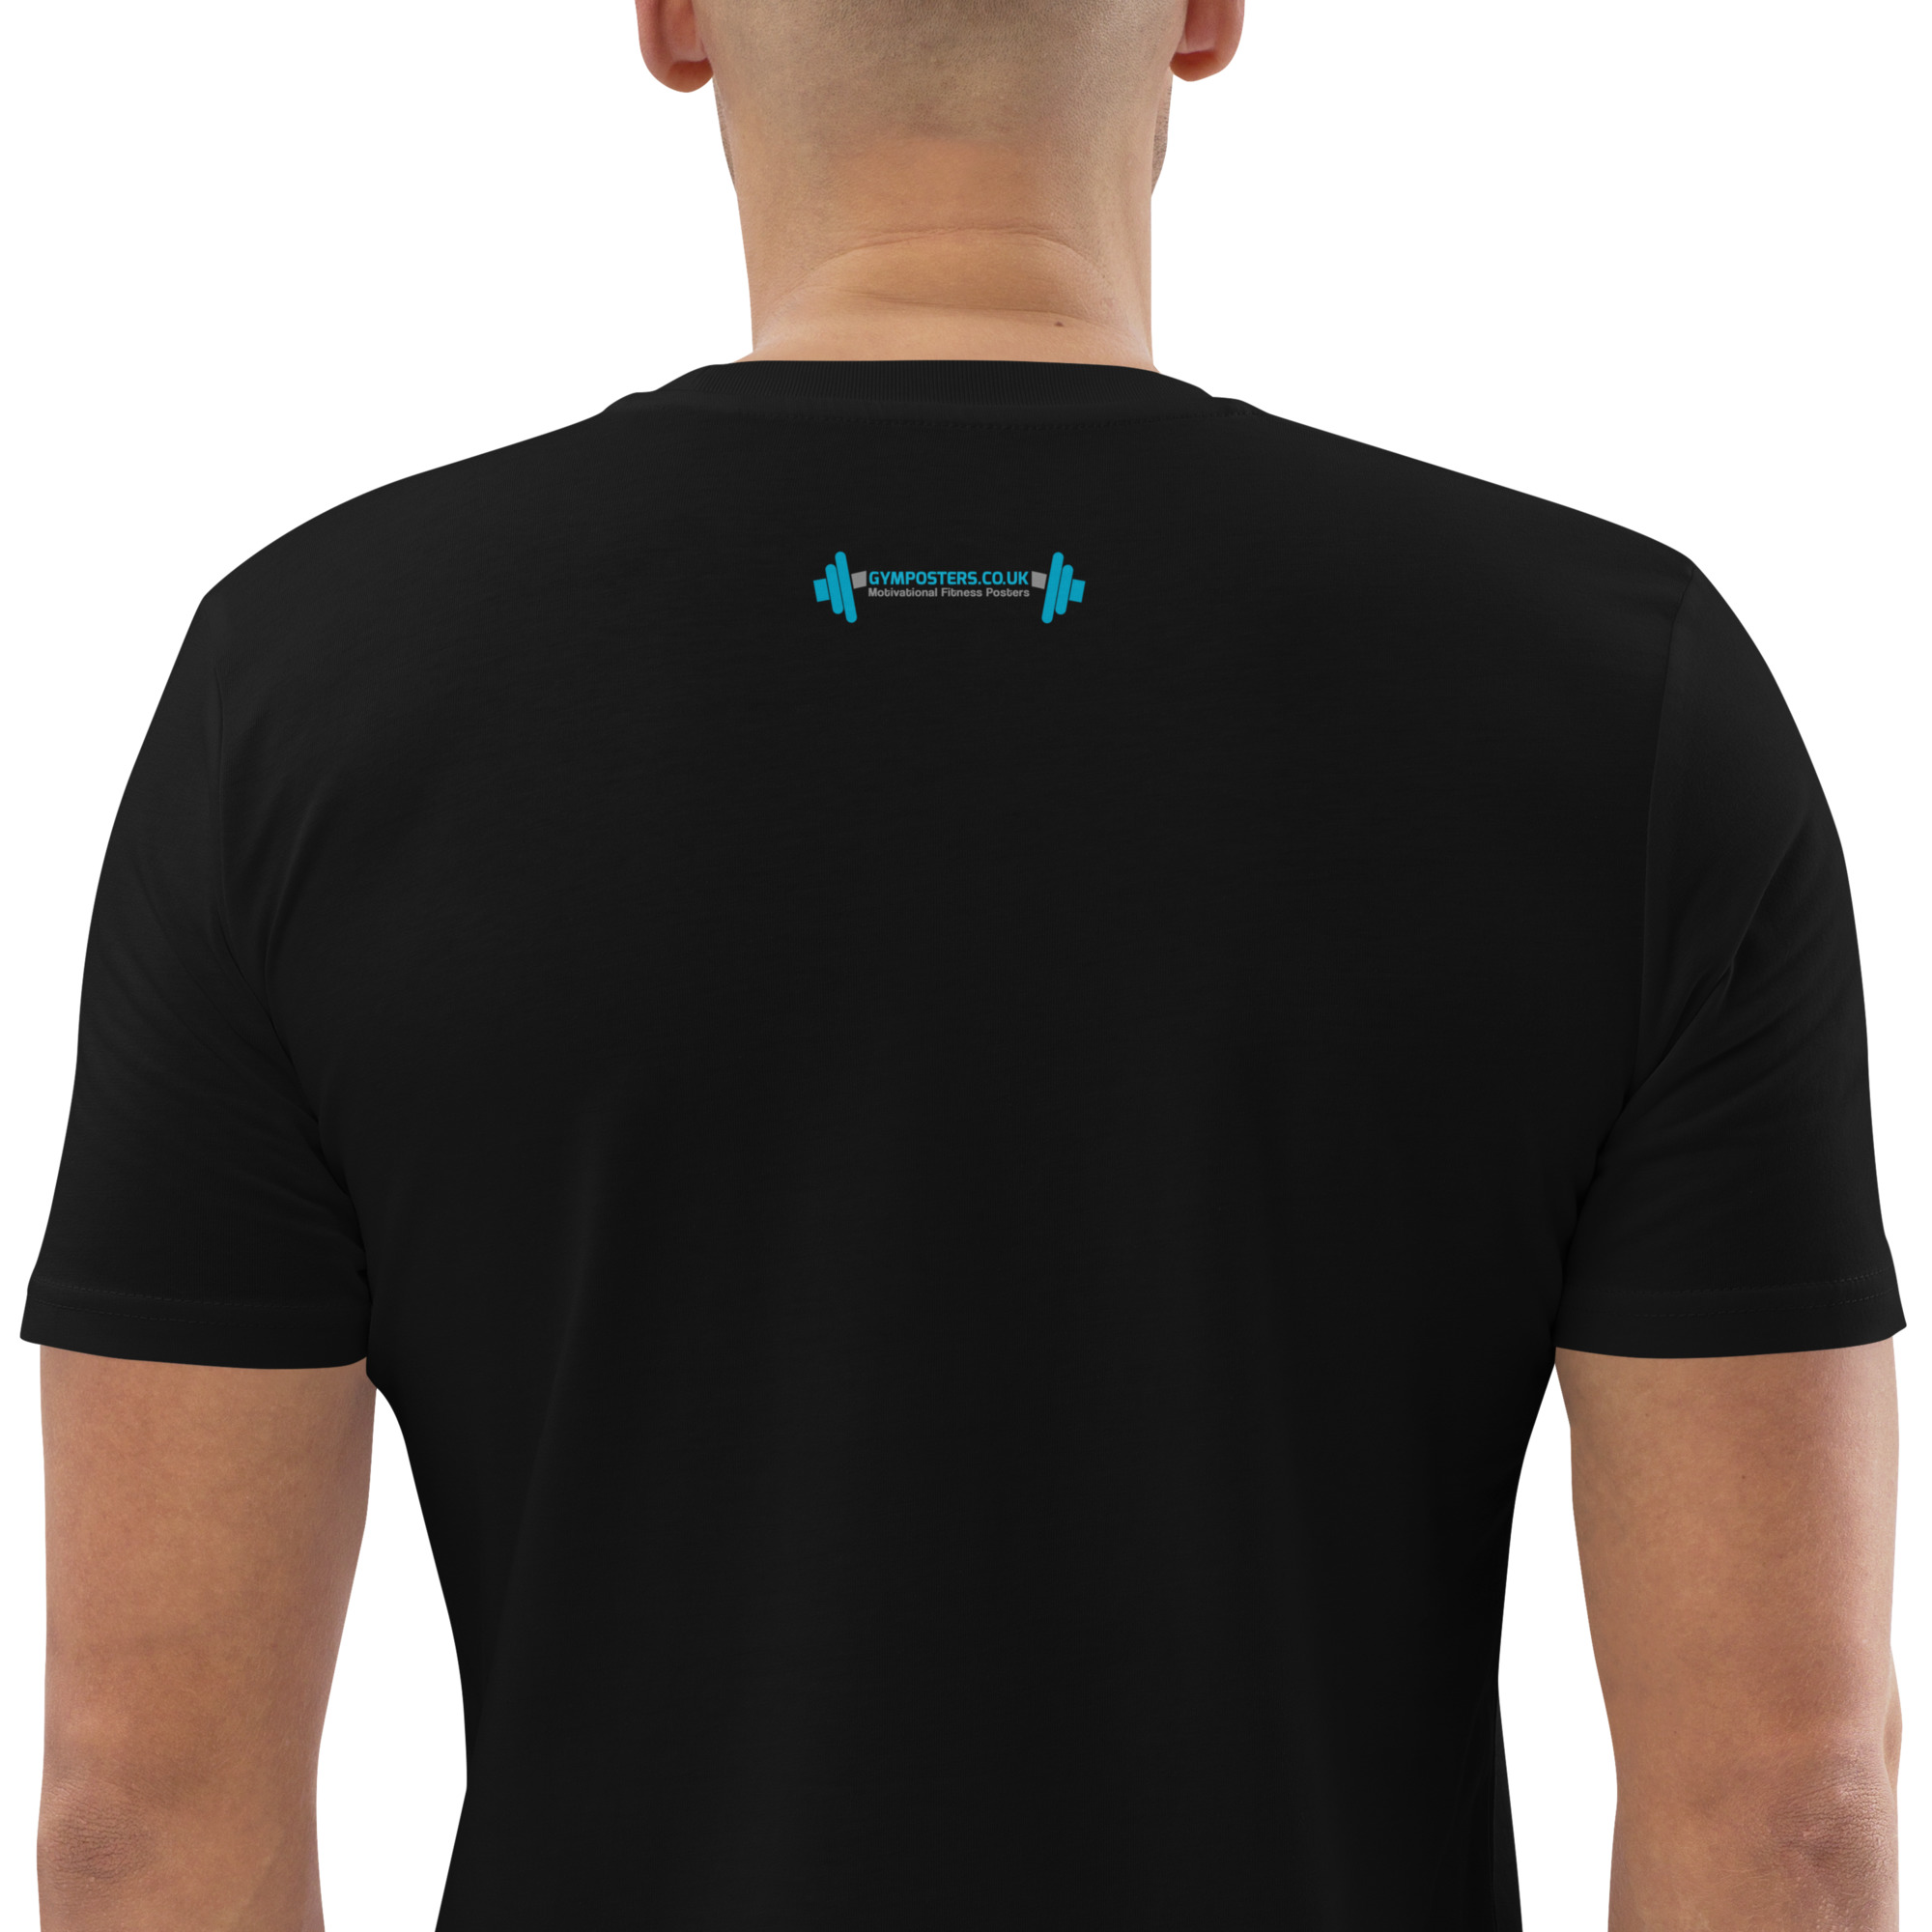 unisex-organic-cotton-t-shirt-black-zoomed-in-2-6578572d363bd.jpg